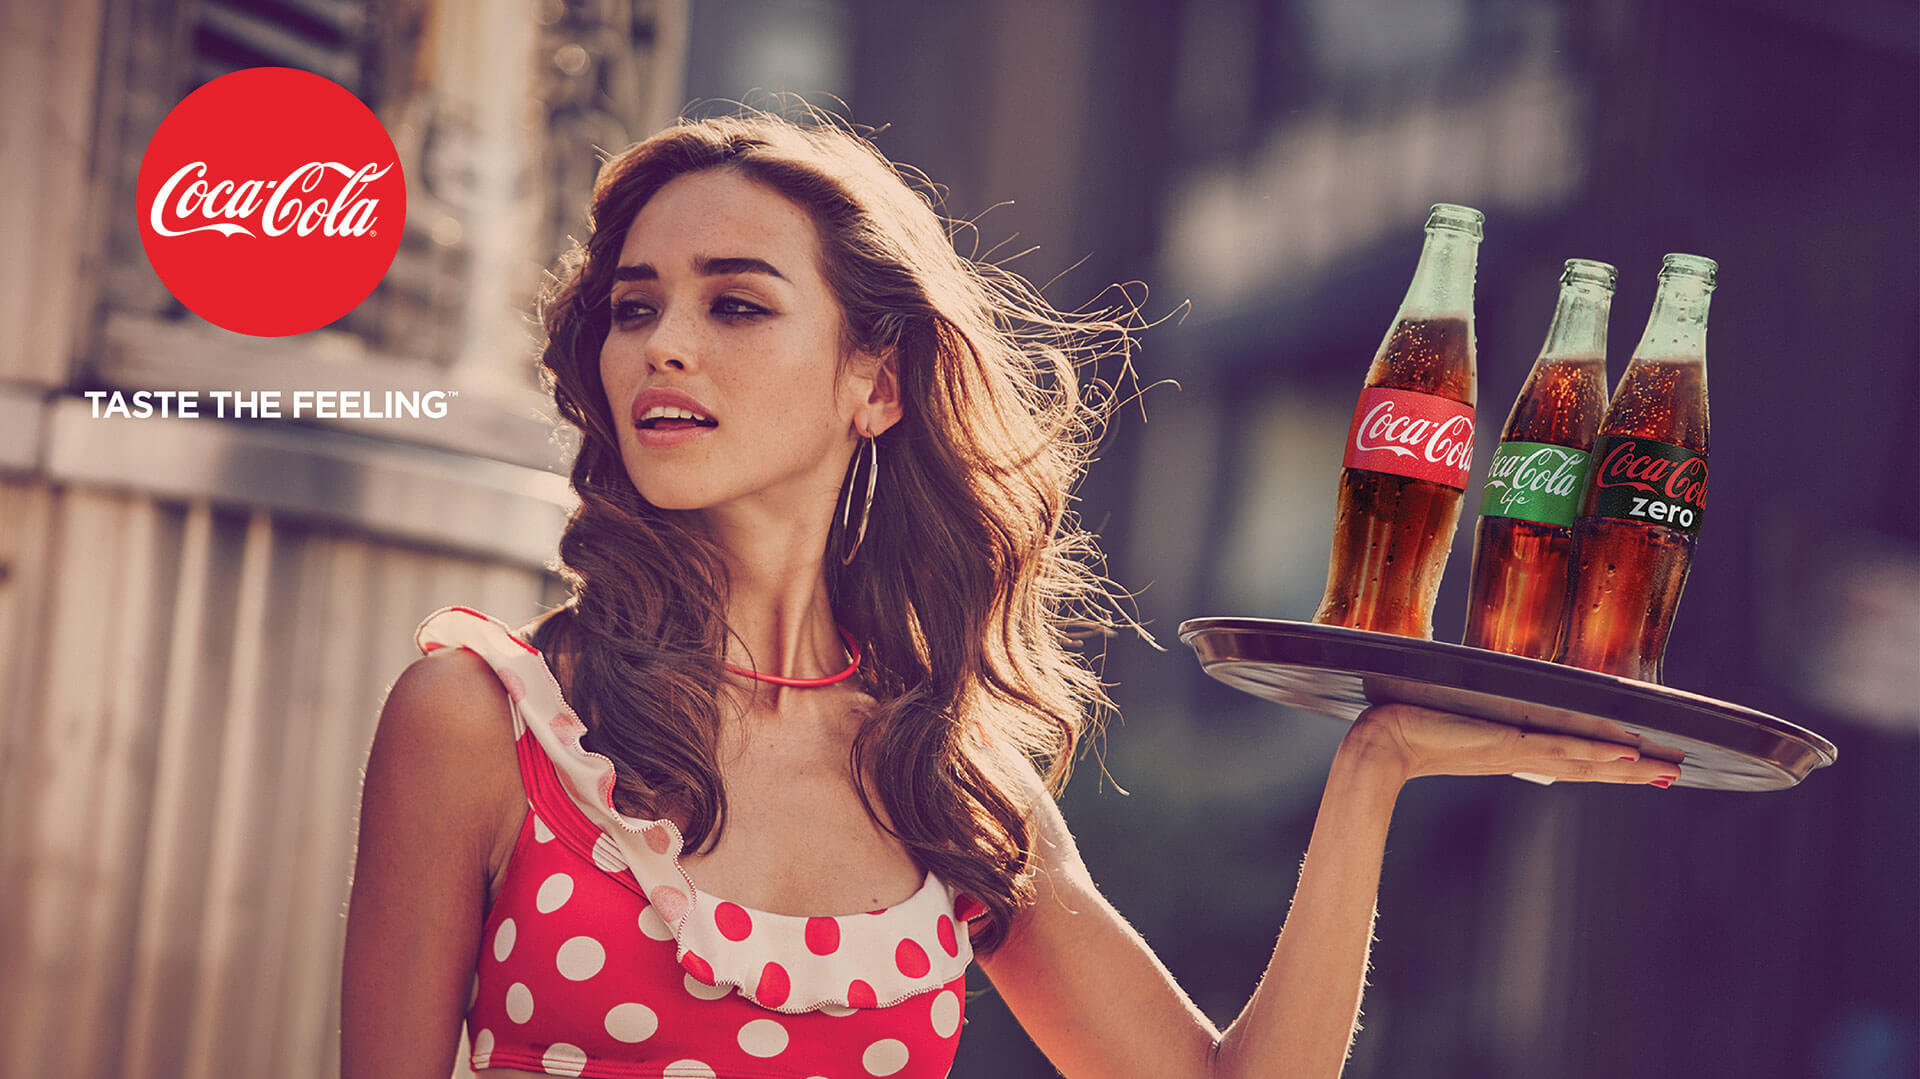 Coca-Cola taste the feeling